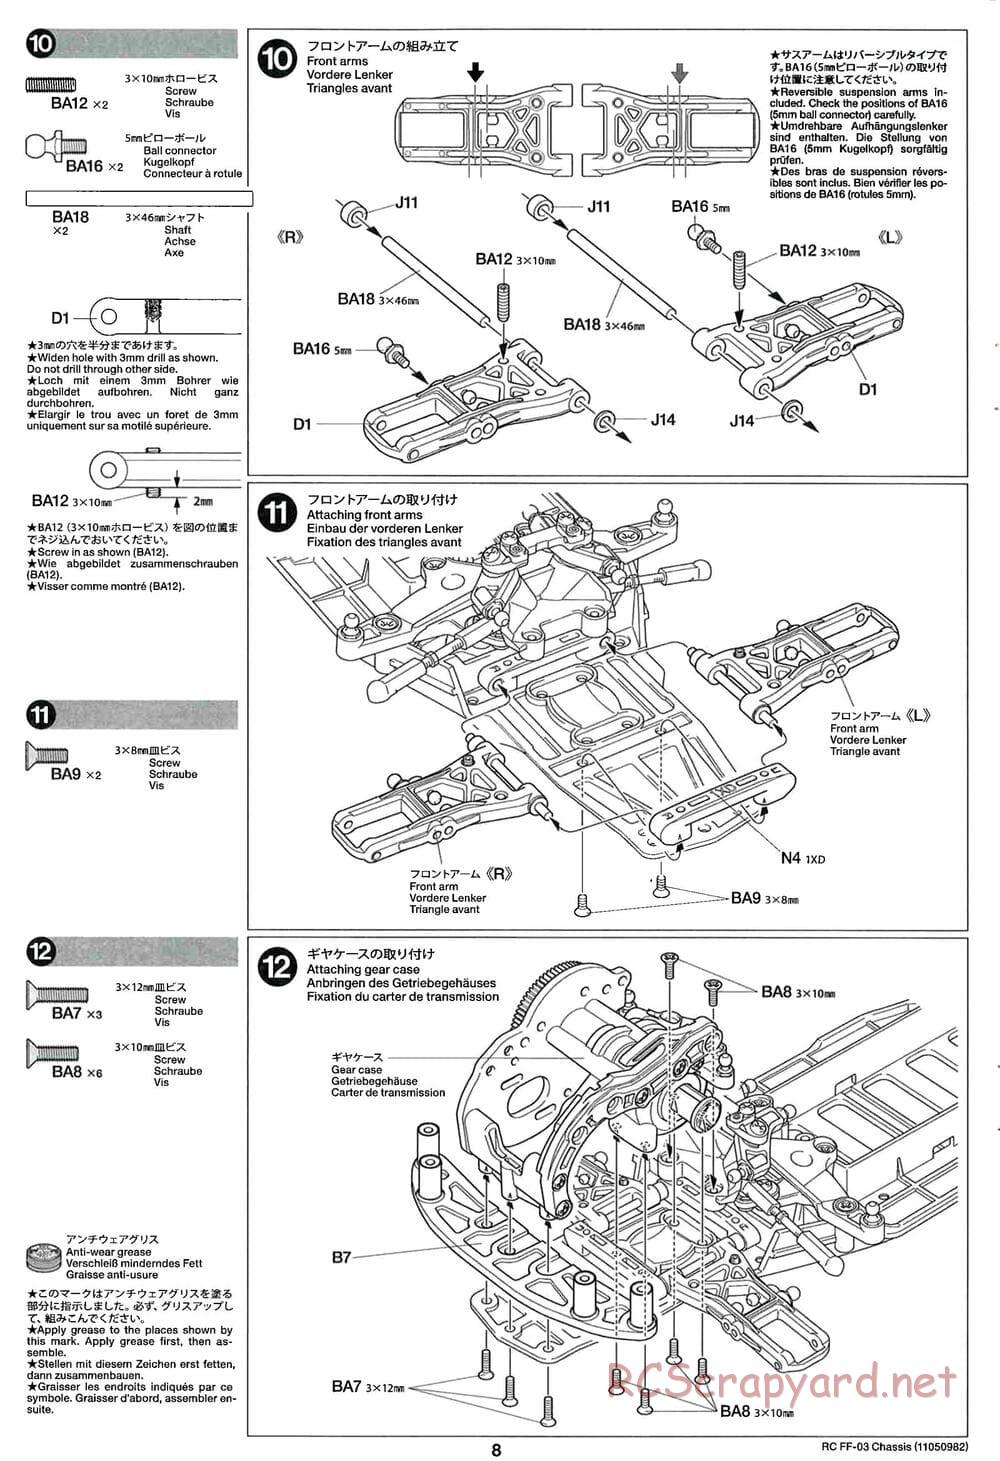 Tamiya - FF-03 Chassis - Manual - Page 8